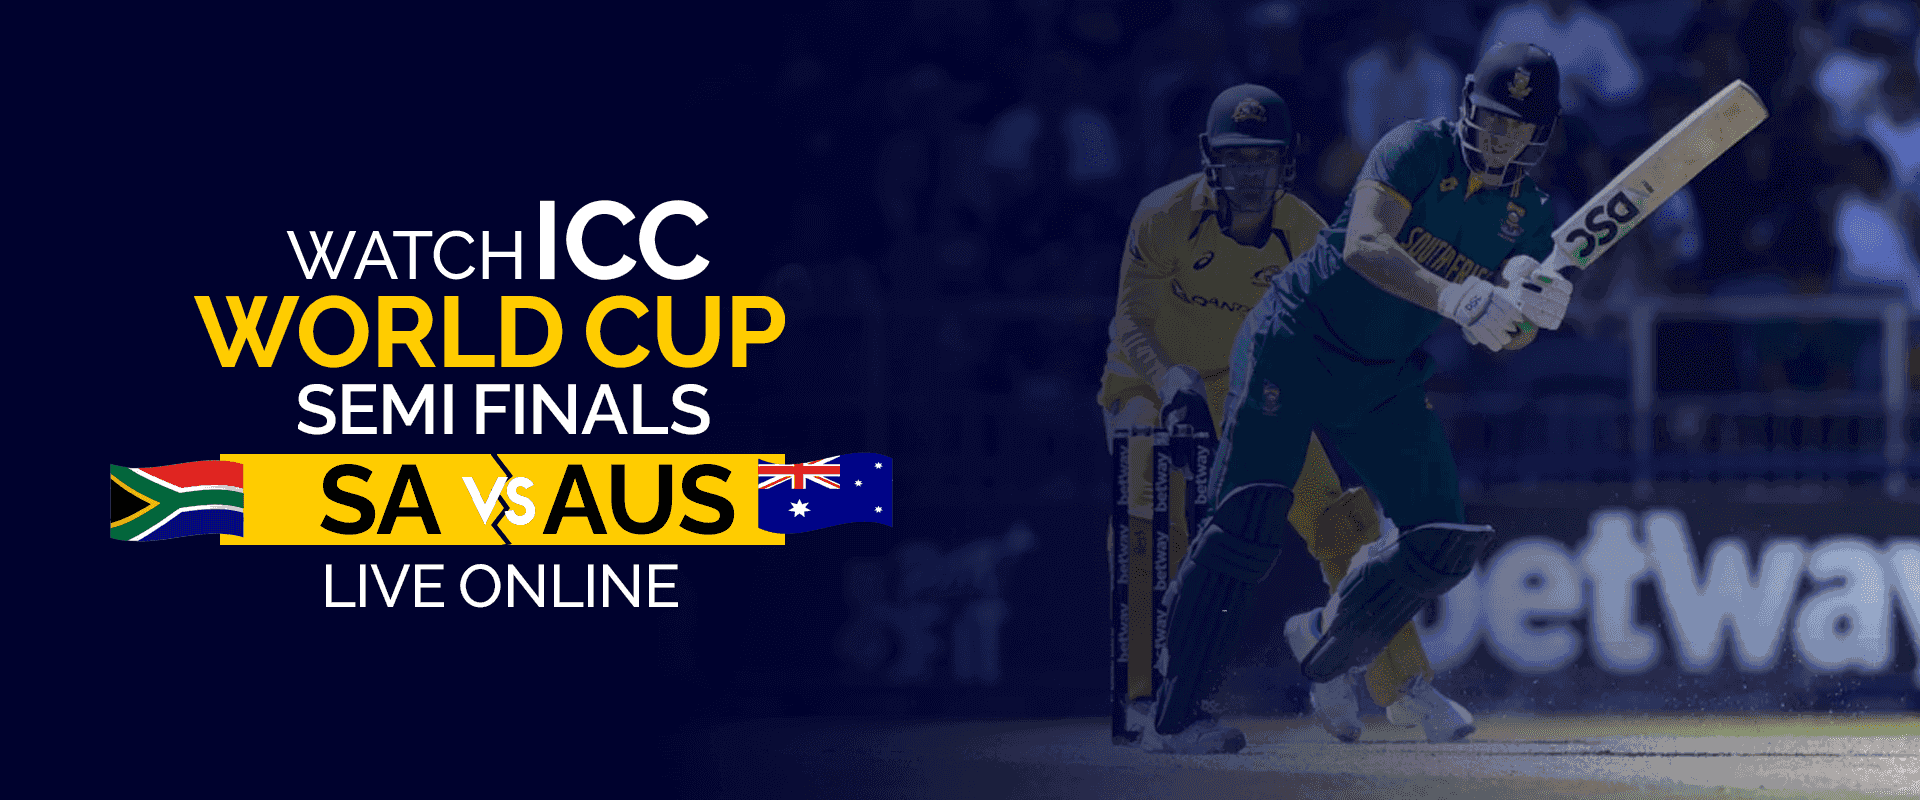 Watch ICC World Cup Semi-Finals SA vs AUS Live Online